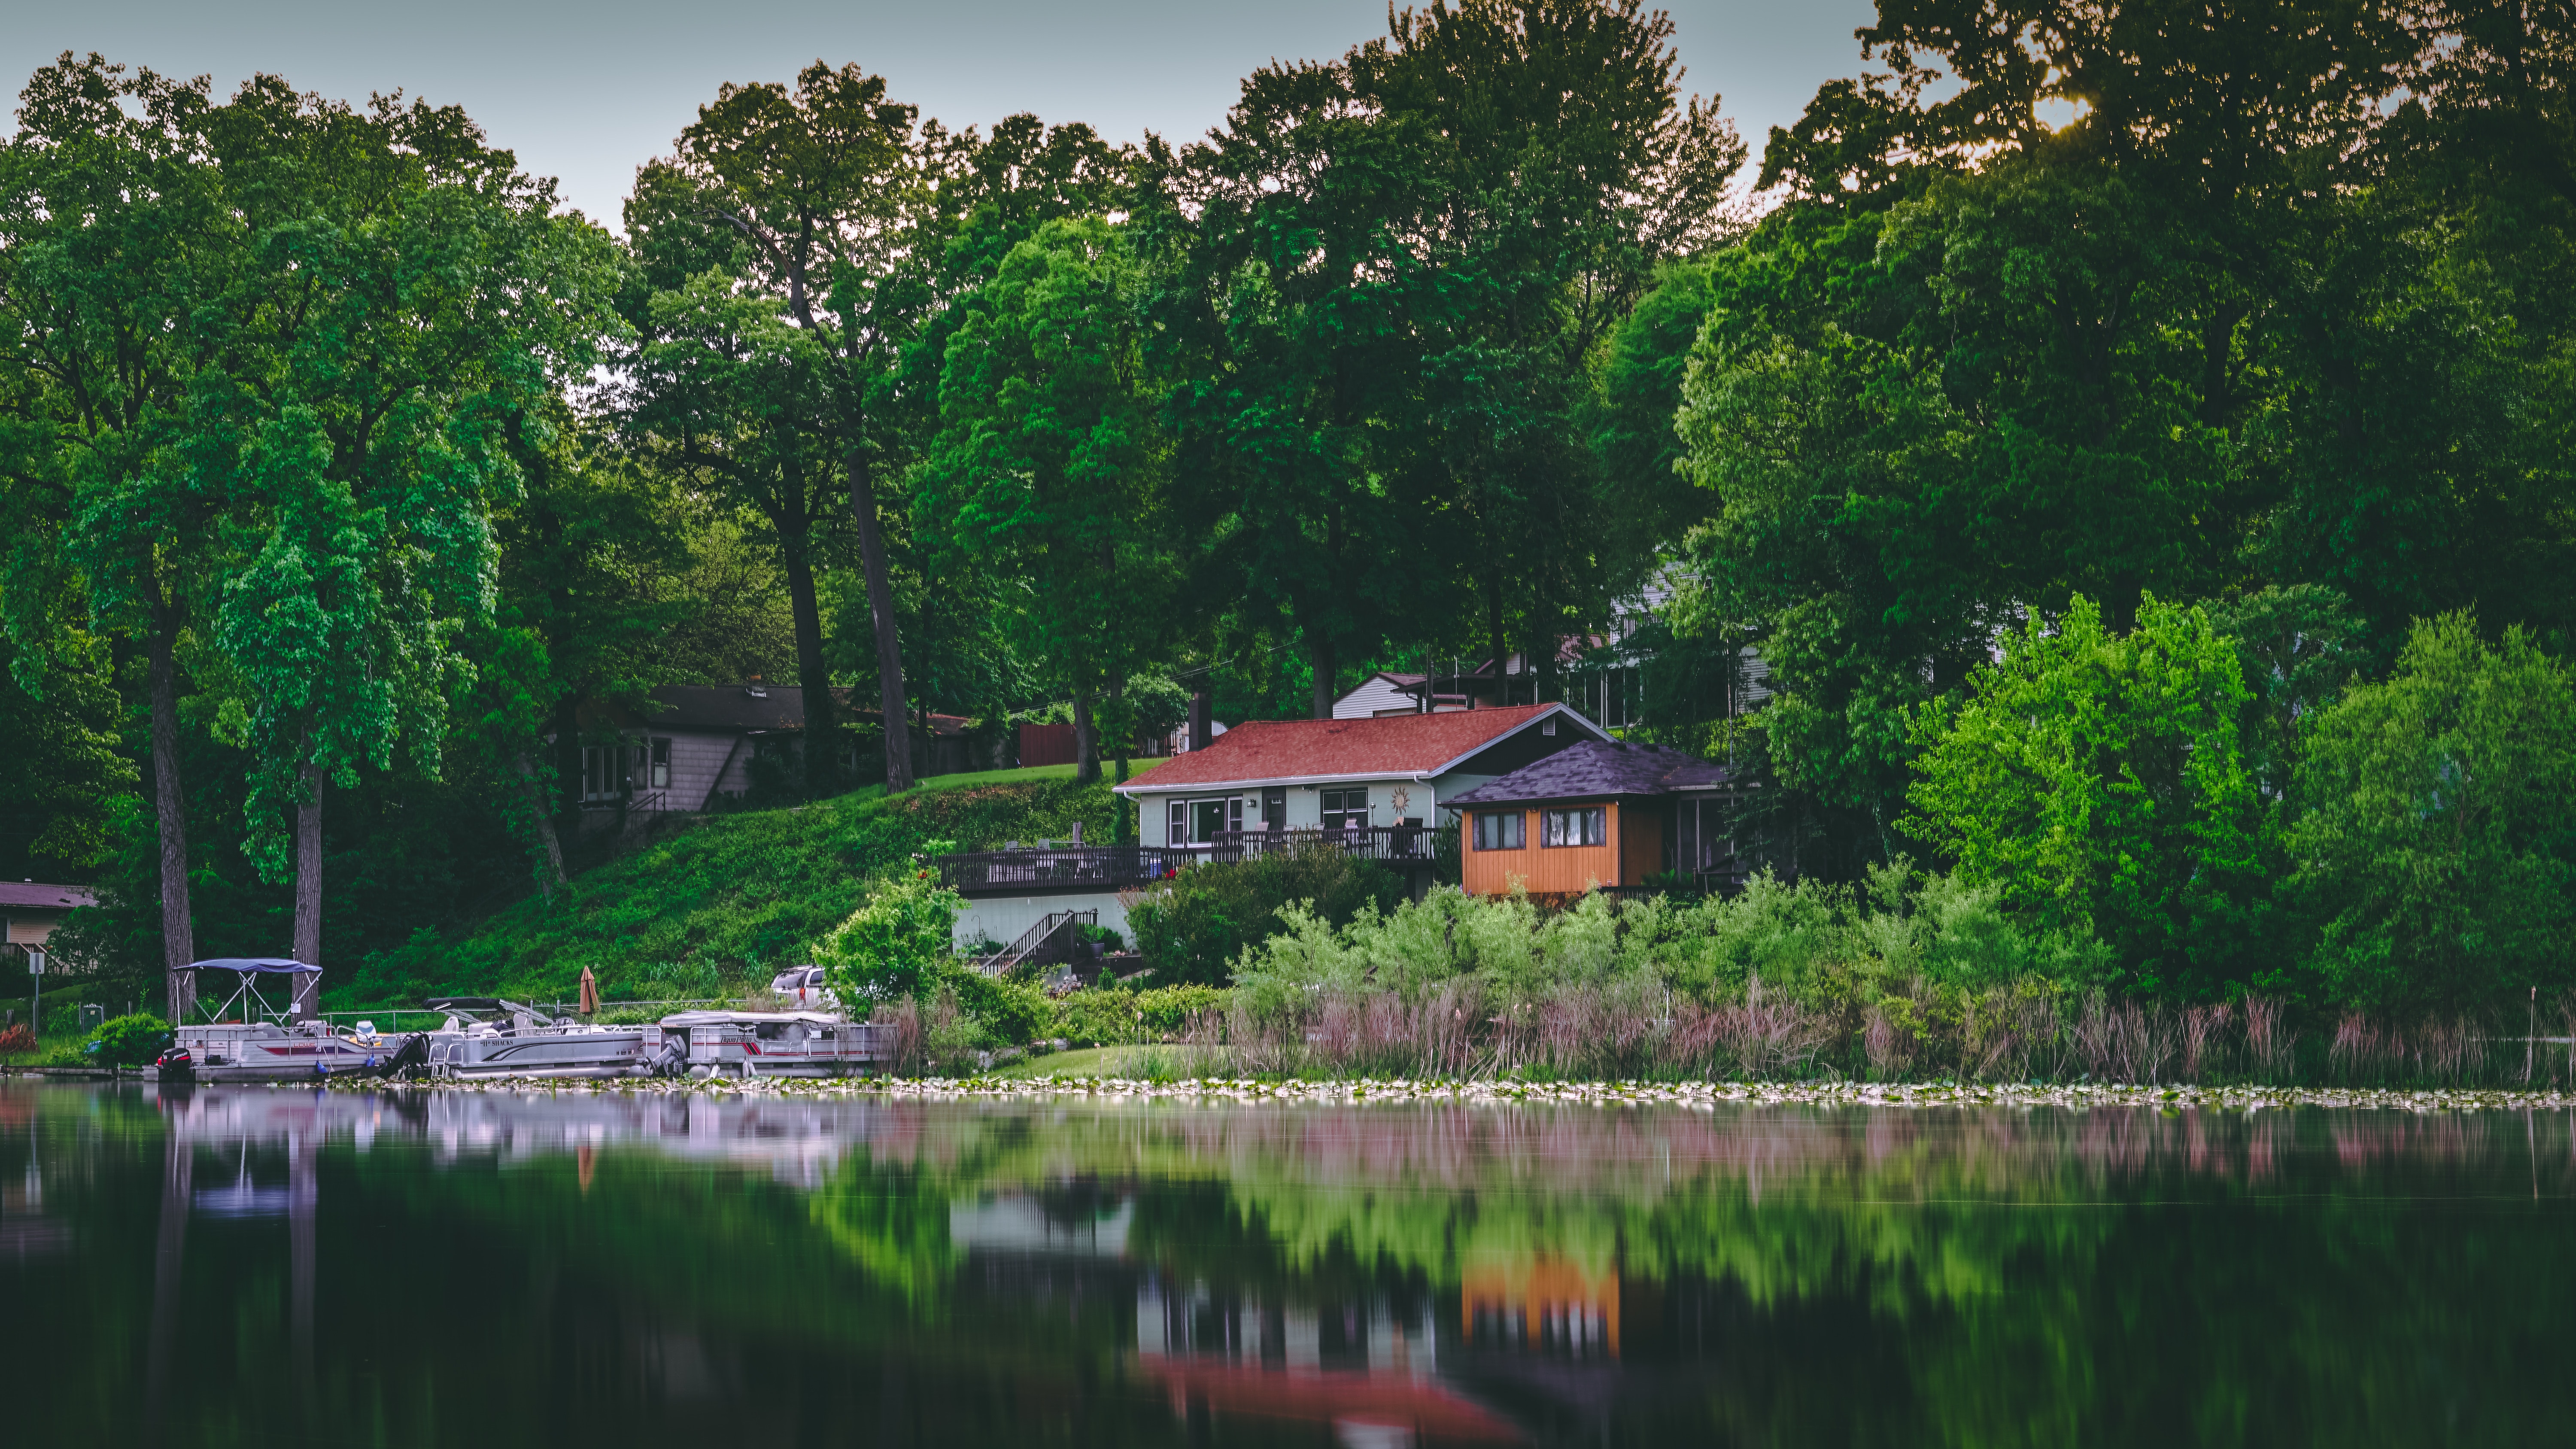 Best Lake House Photo · 100% Free Downloads